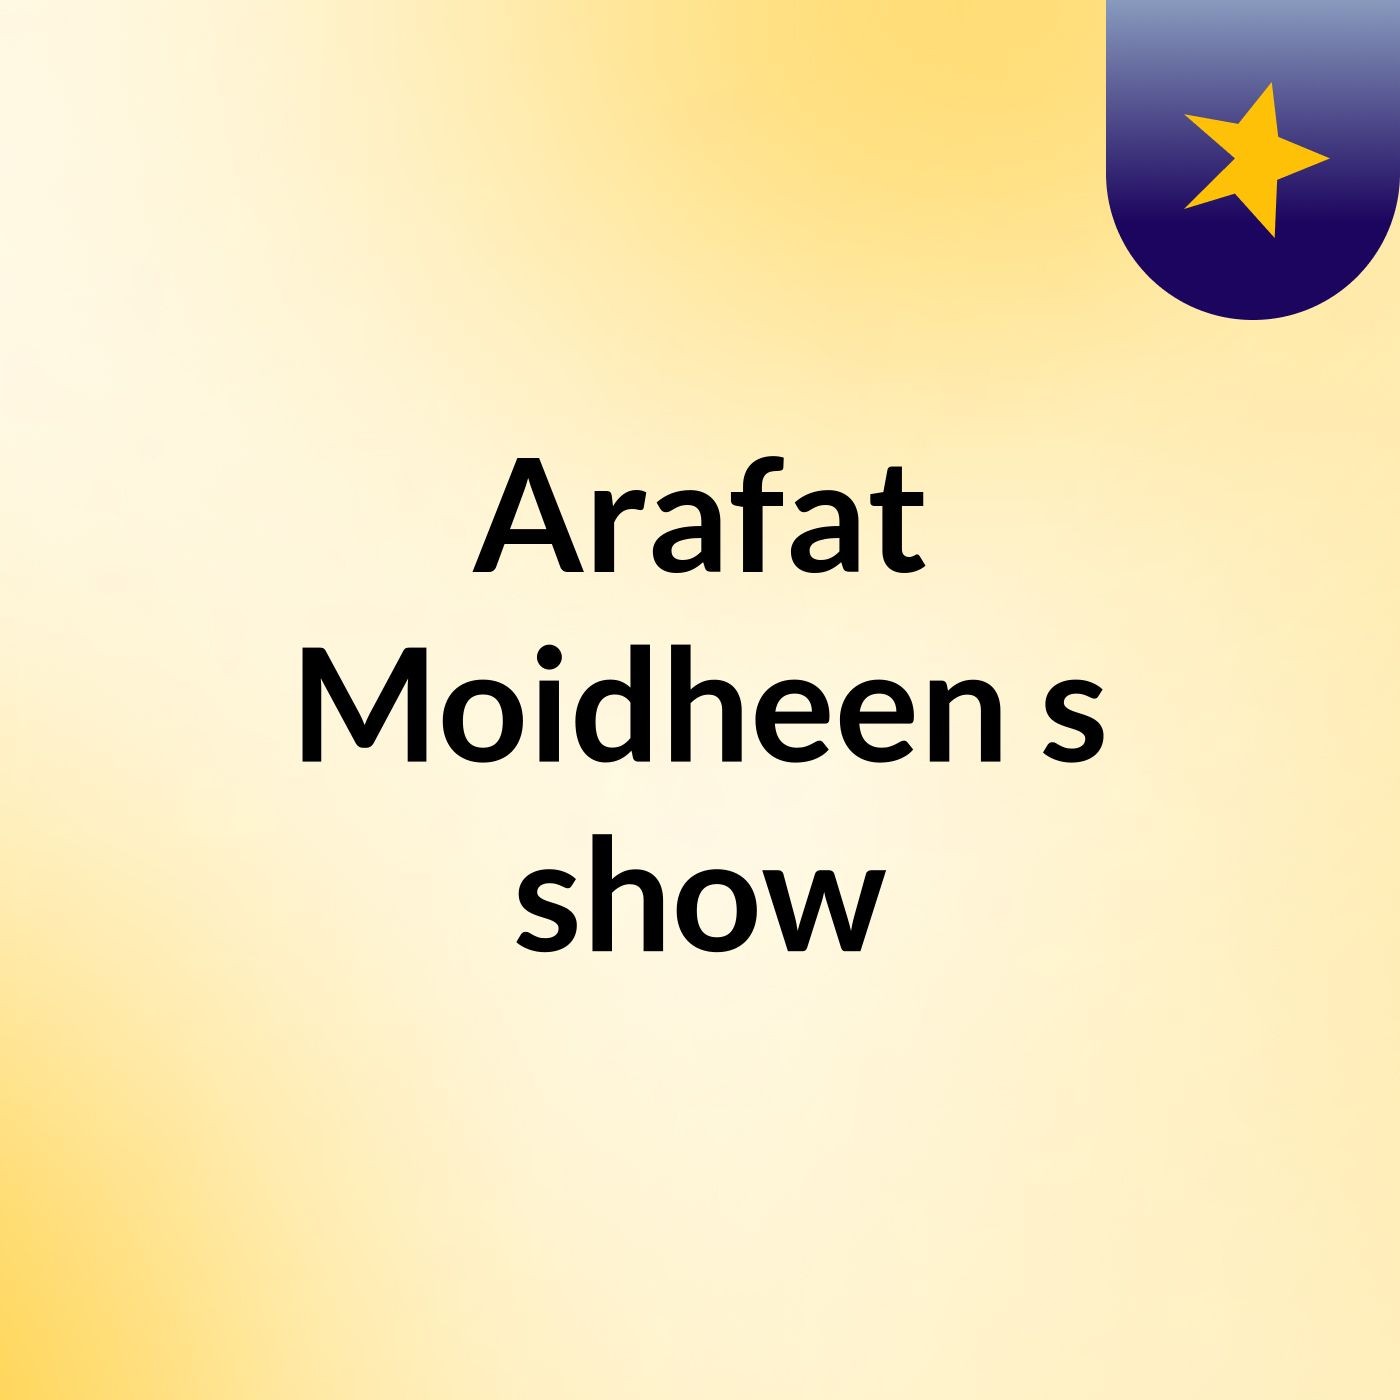 Arafat Moidheen's show